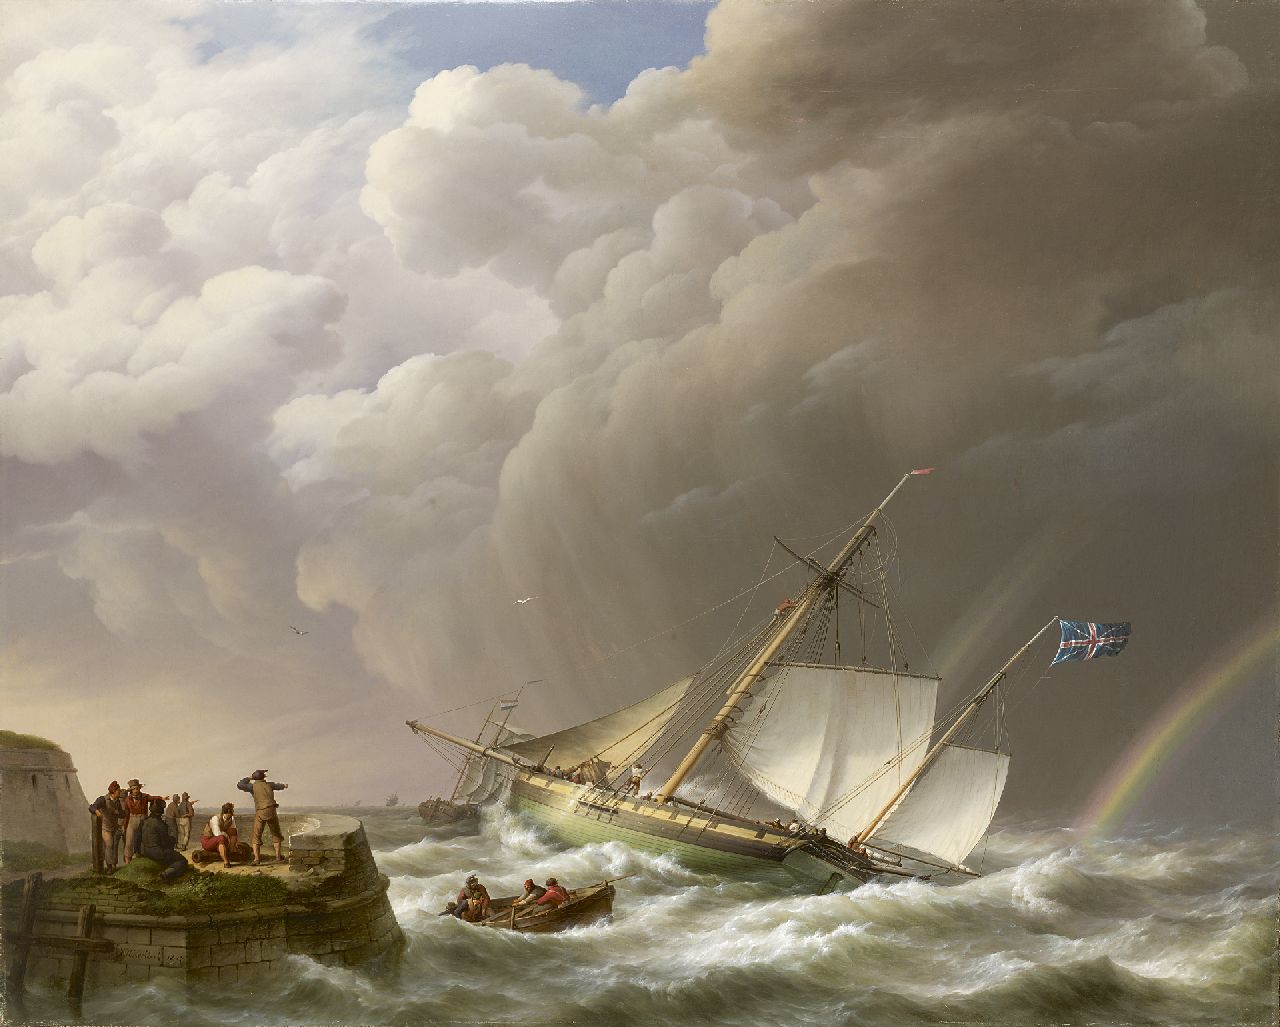 Koekkoek J.H.  | Johannes Hermanus Koekkoek, Sailing ship off a jetty in stormy weather, Öl auf Leinwand 113,0 x 142,0 cm, signed l.l. und dated 1827